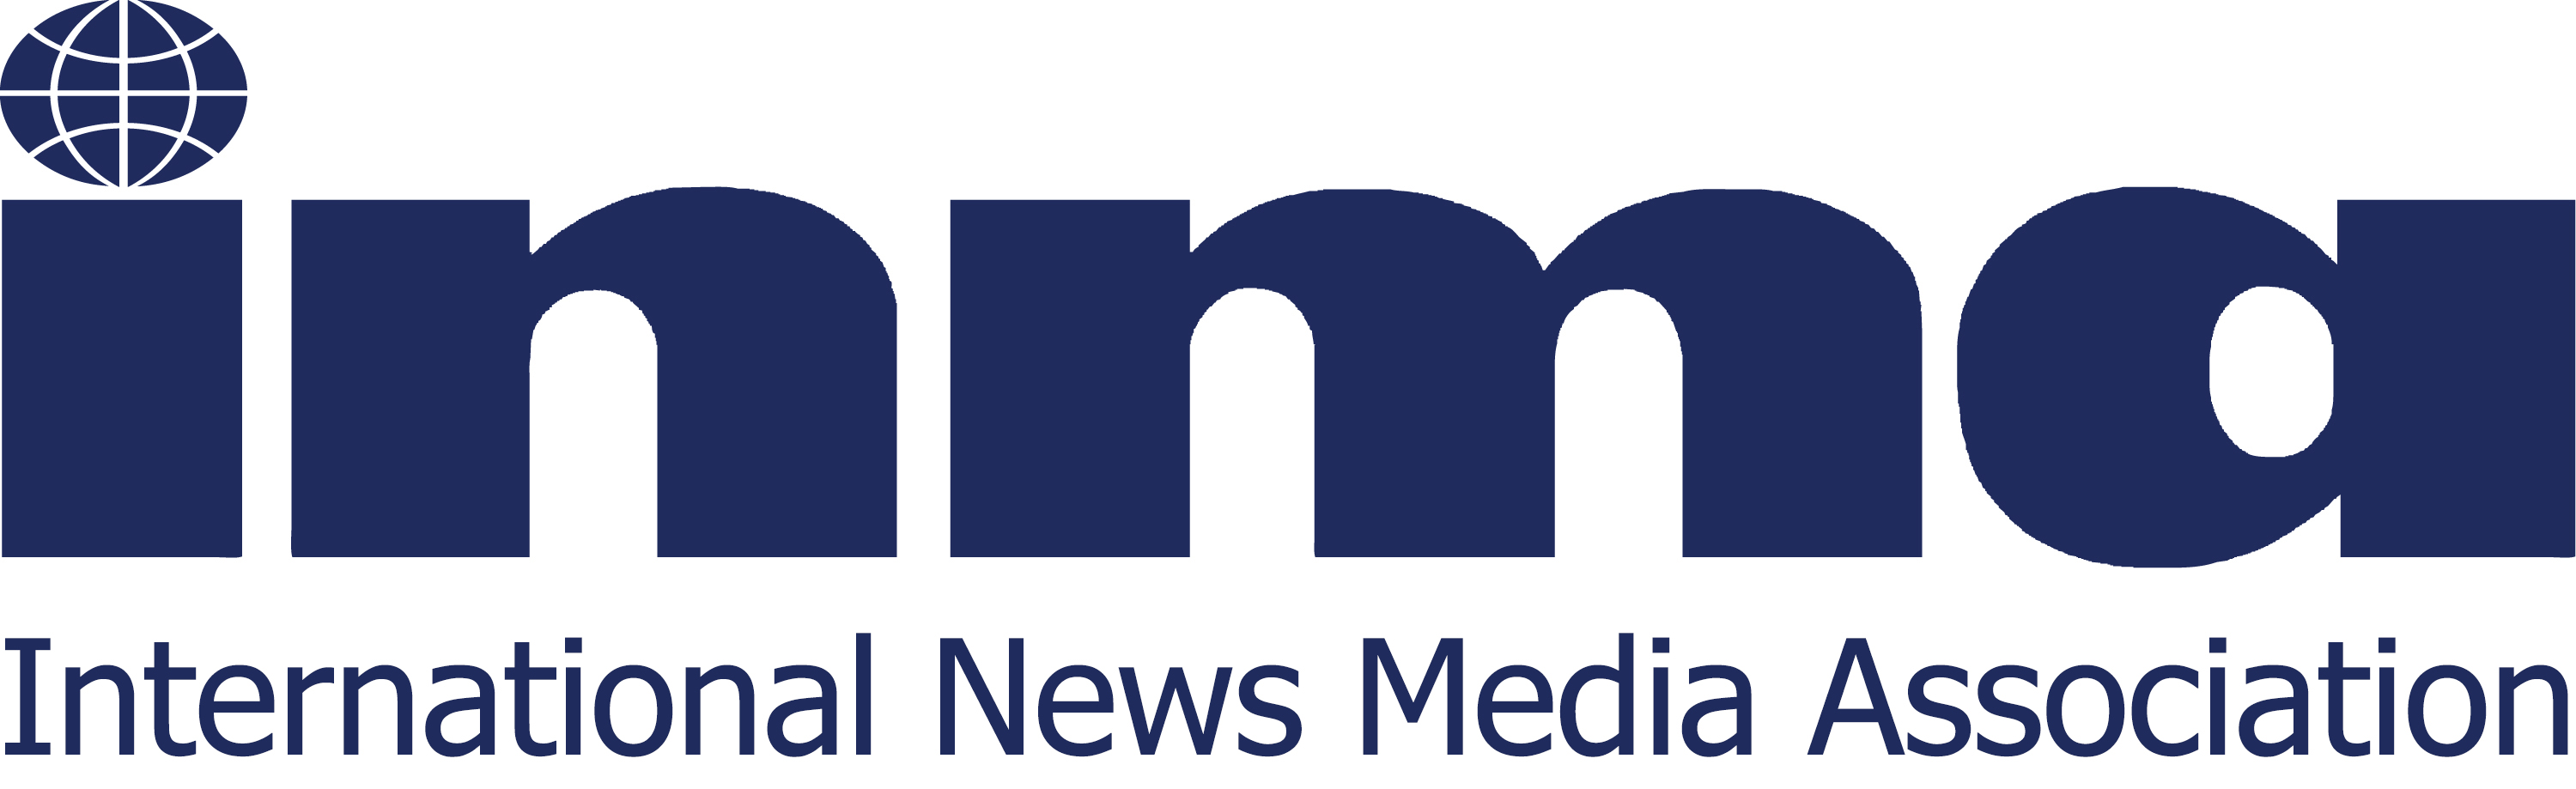 INMA_Logo